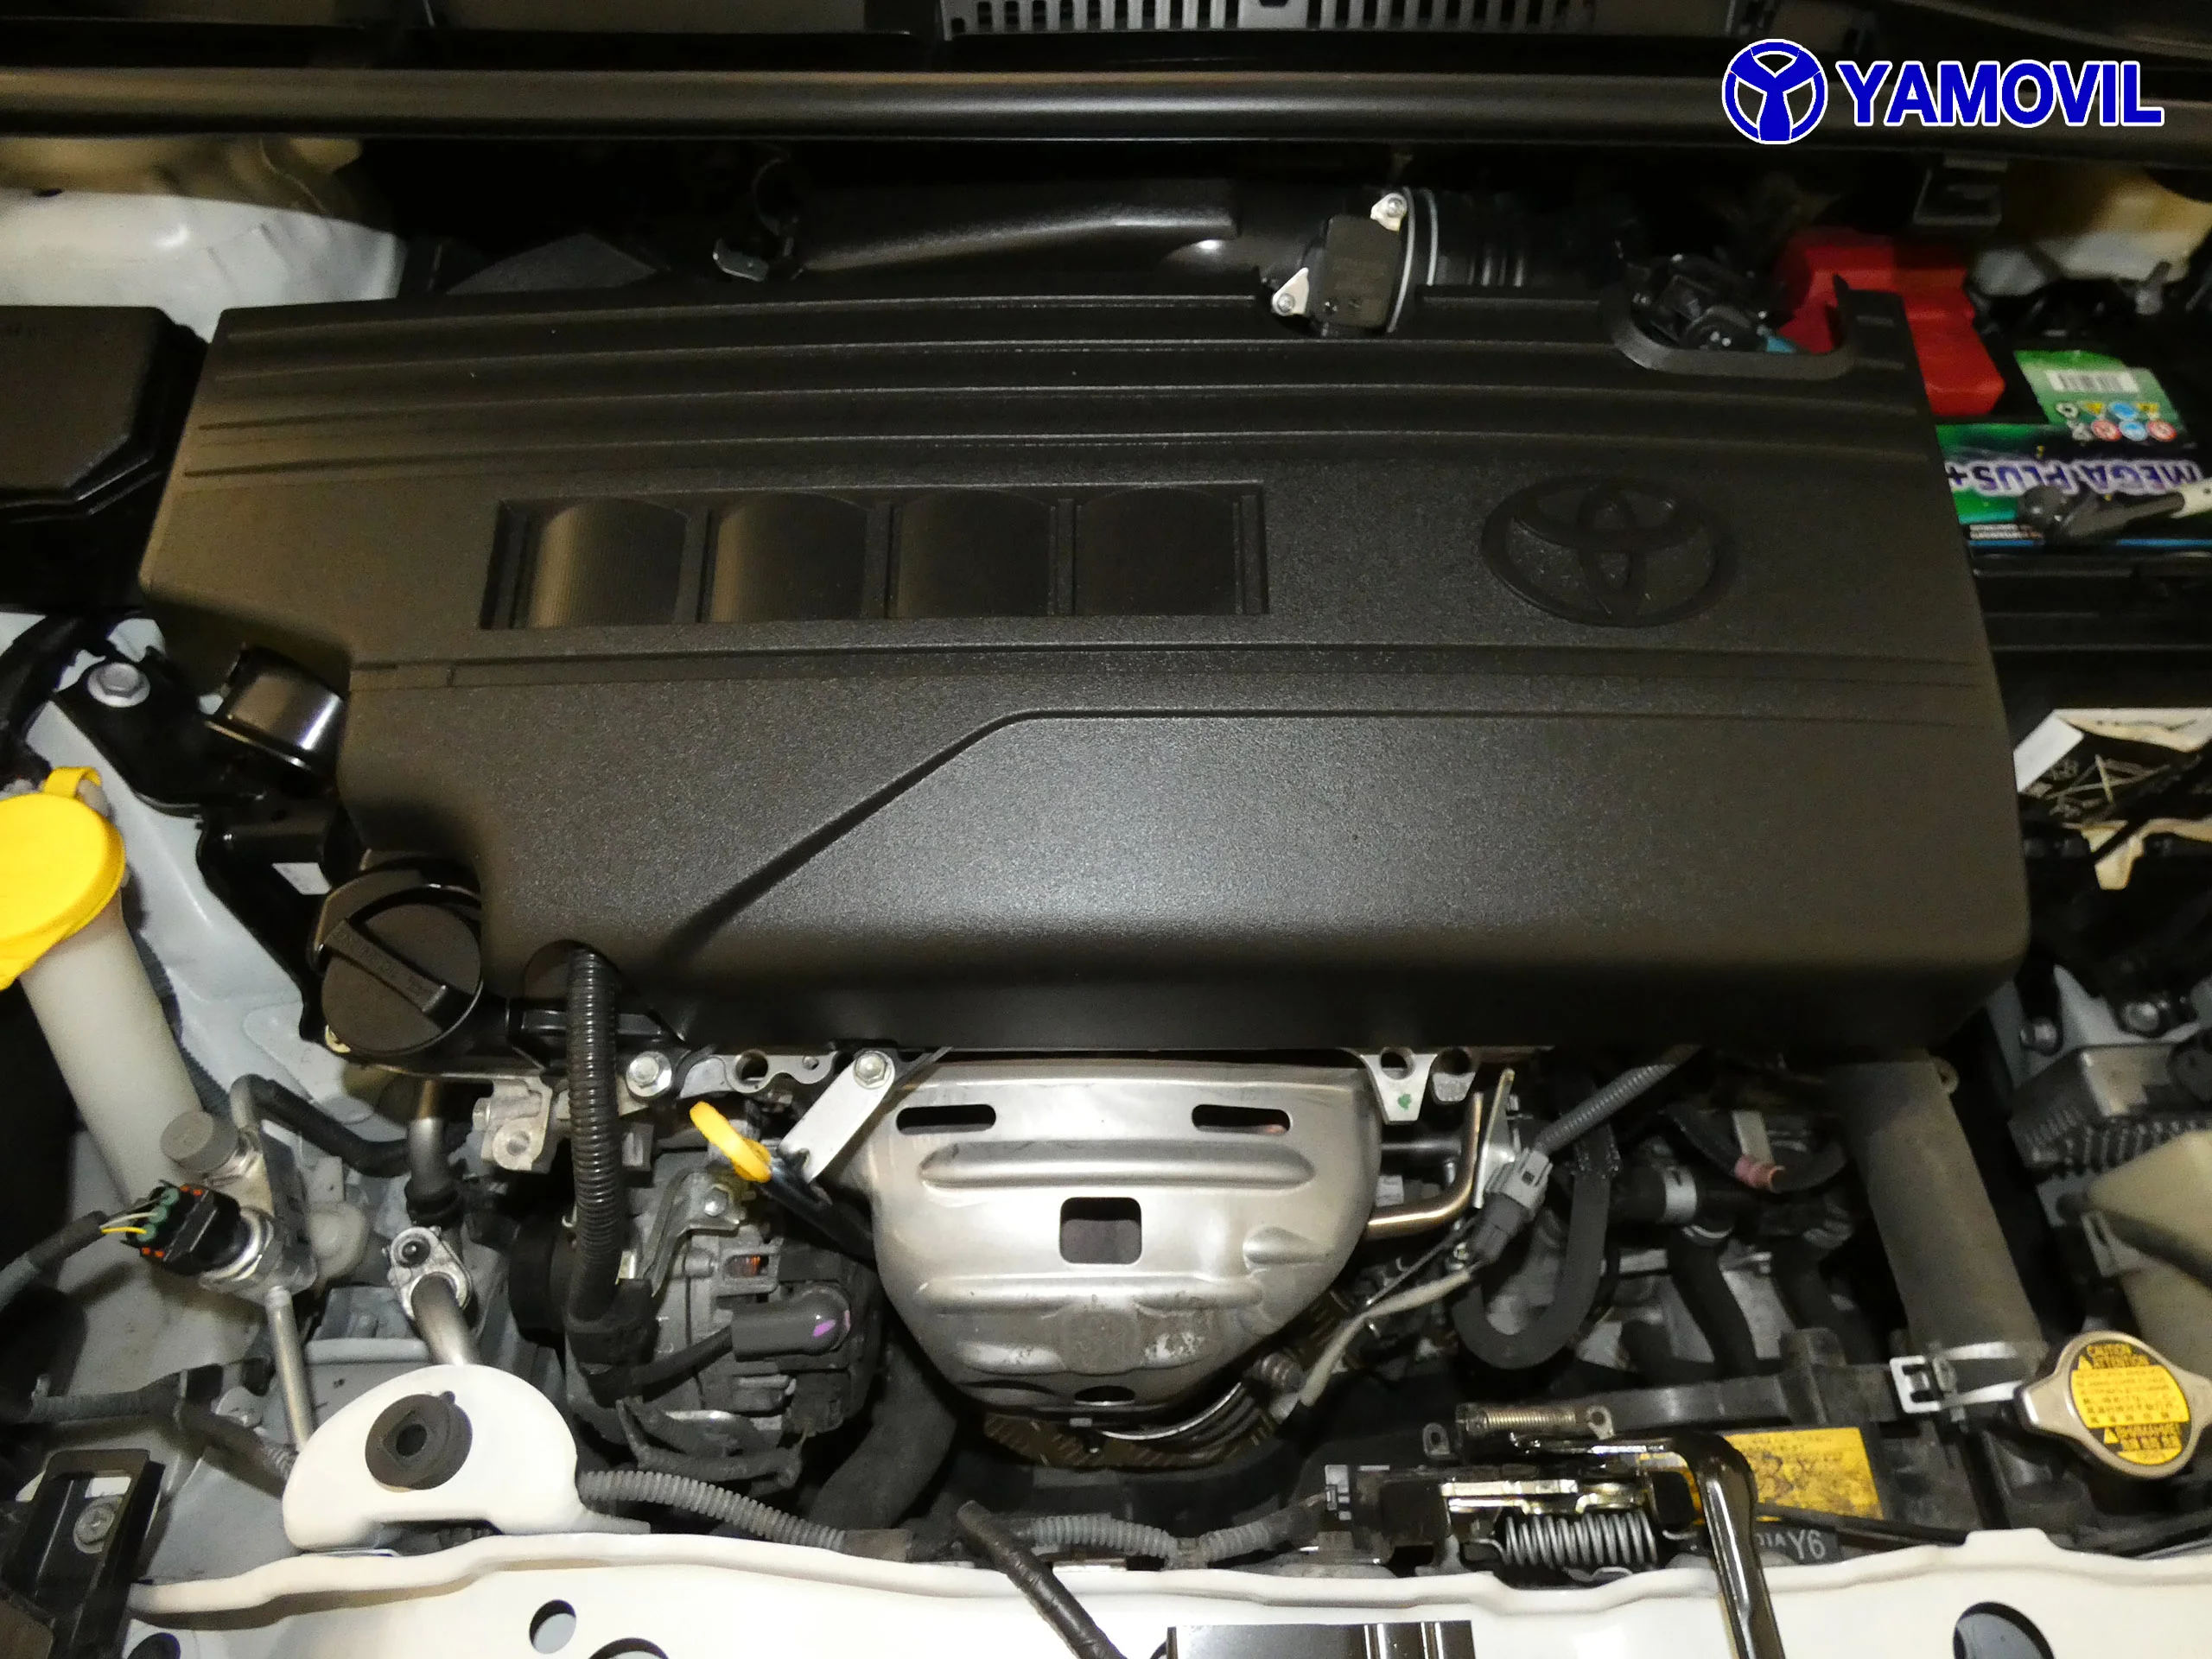 Toyota Yaris 1.3 MULTIDRIVE ACTIVE 5P - Foto 8